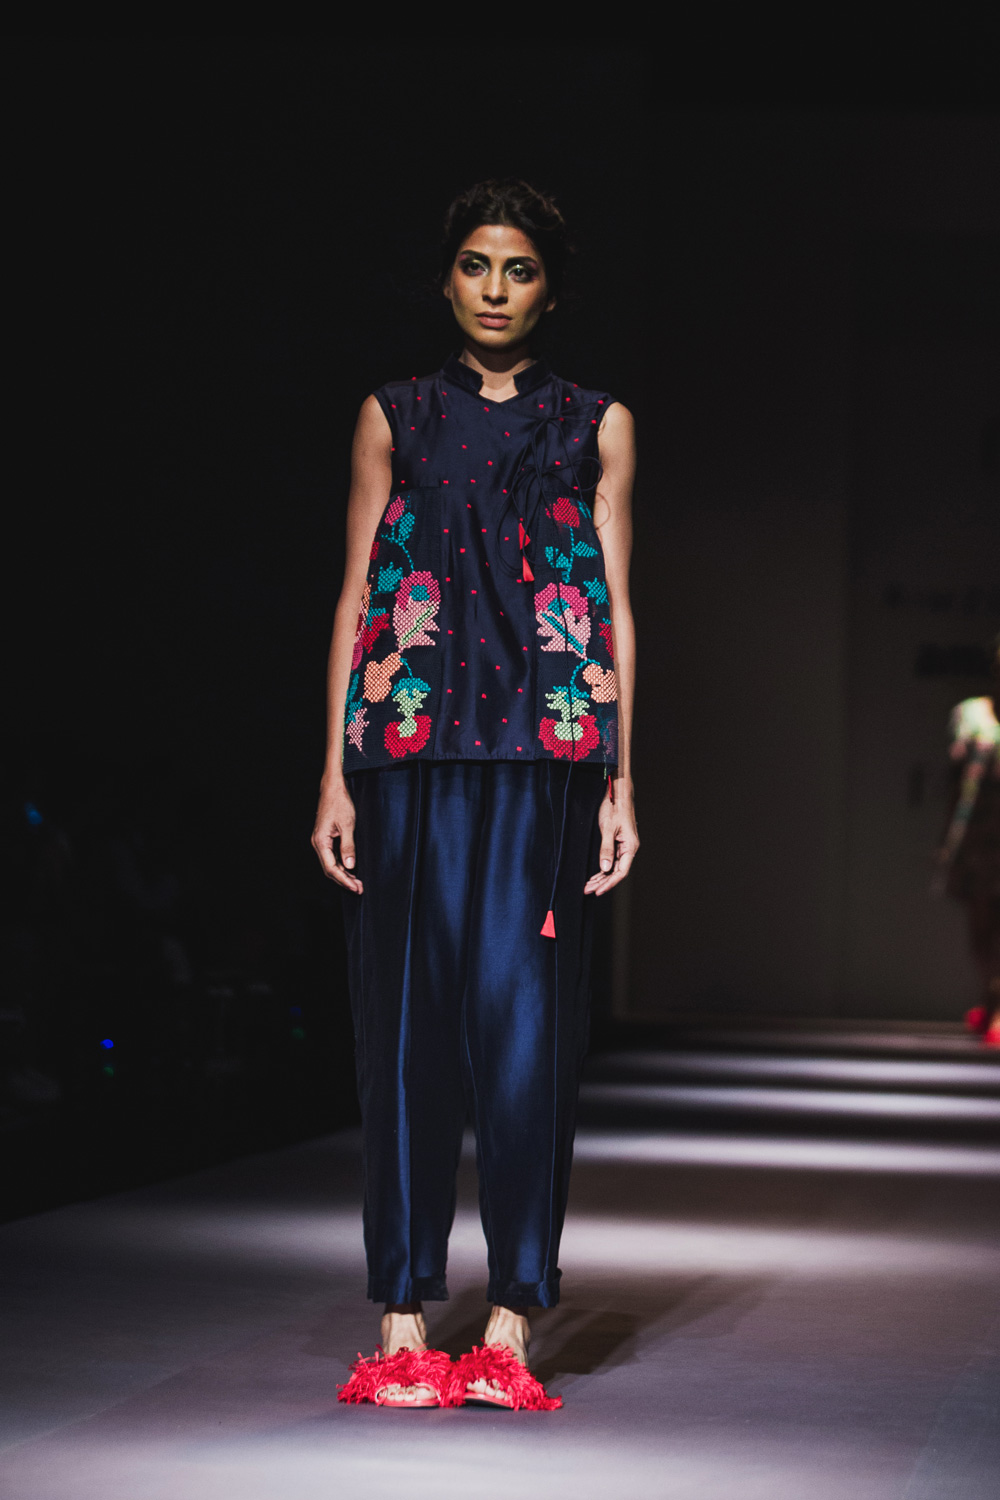 Rimzim Dadu FDCI Amazon India Fashion Week Spring Summer 2018 Look 4